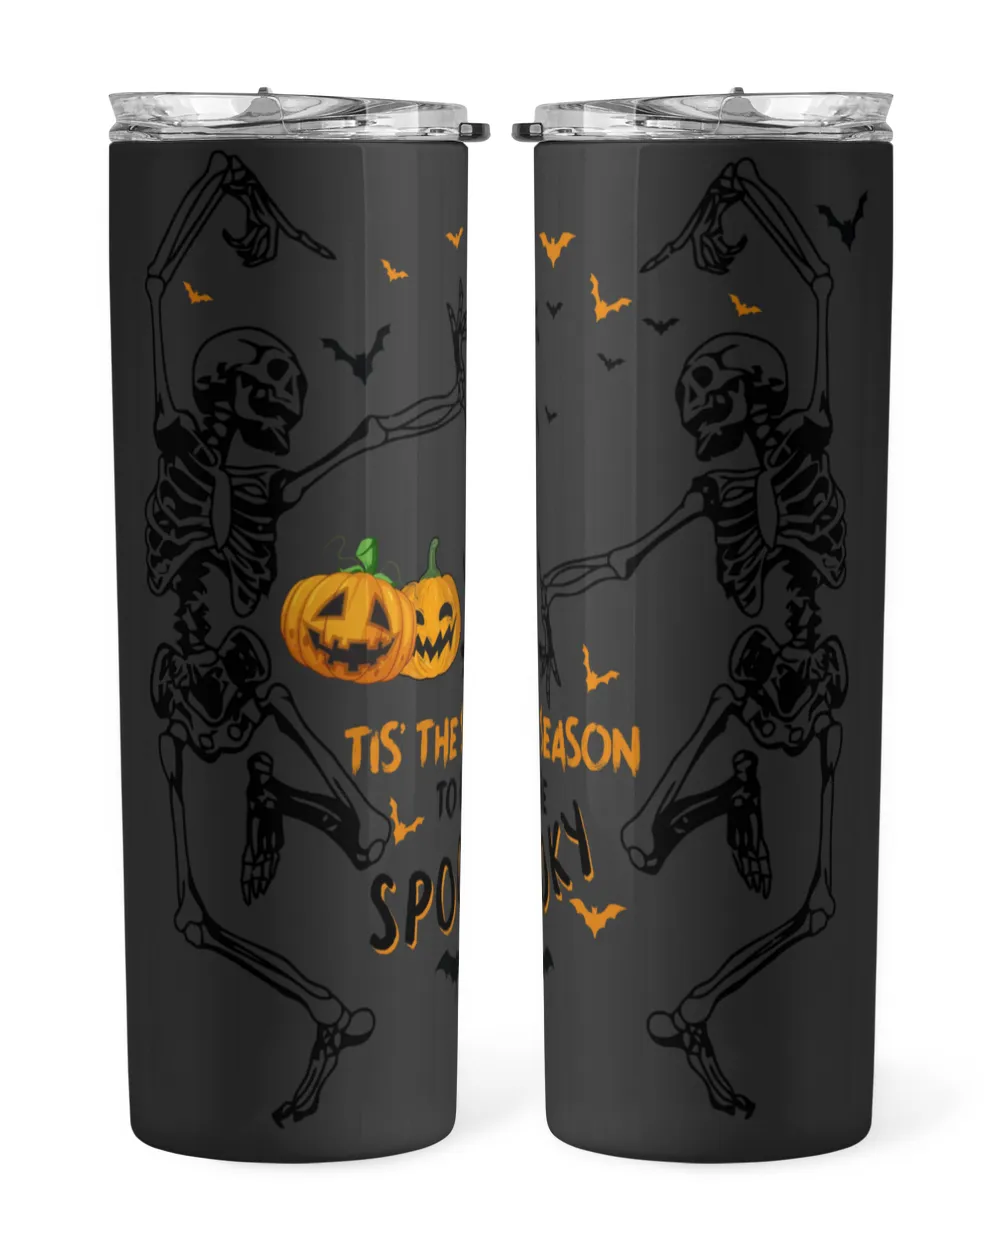 Tis The Season to be spooky Halloween Spooky White Mug, skeleton bat wings pumpkin Halloween